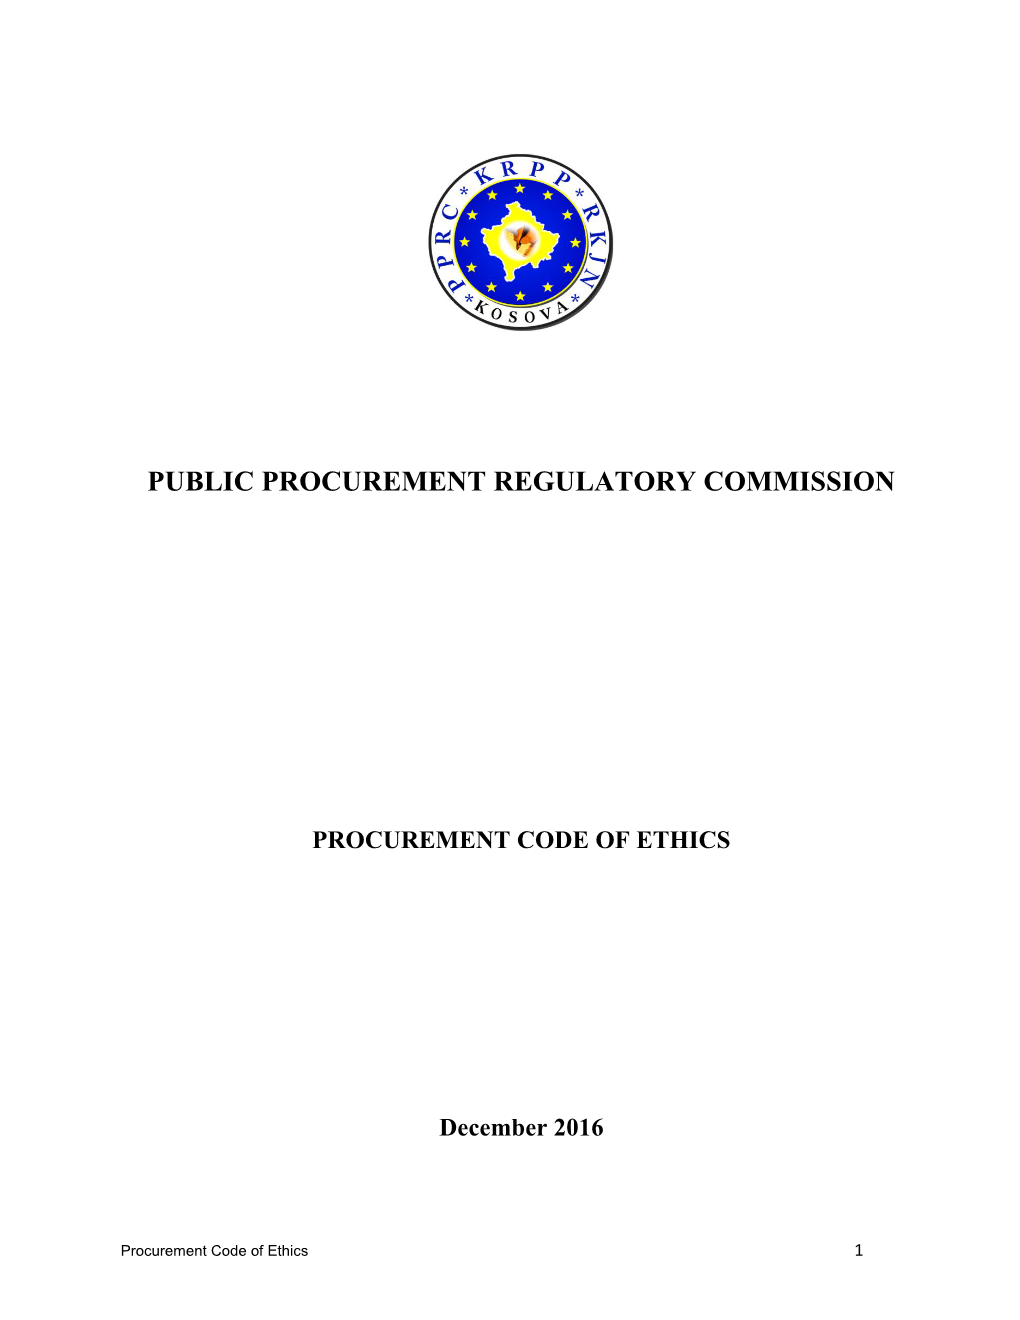 Public Procurement Regulatory Commission